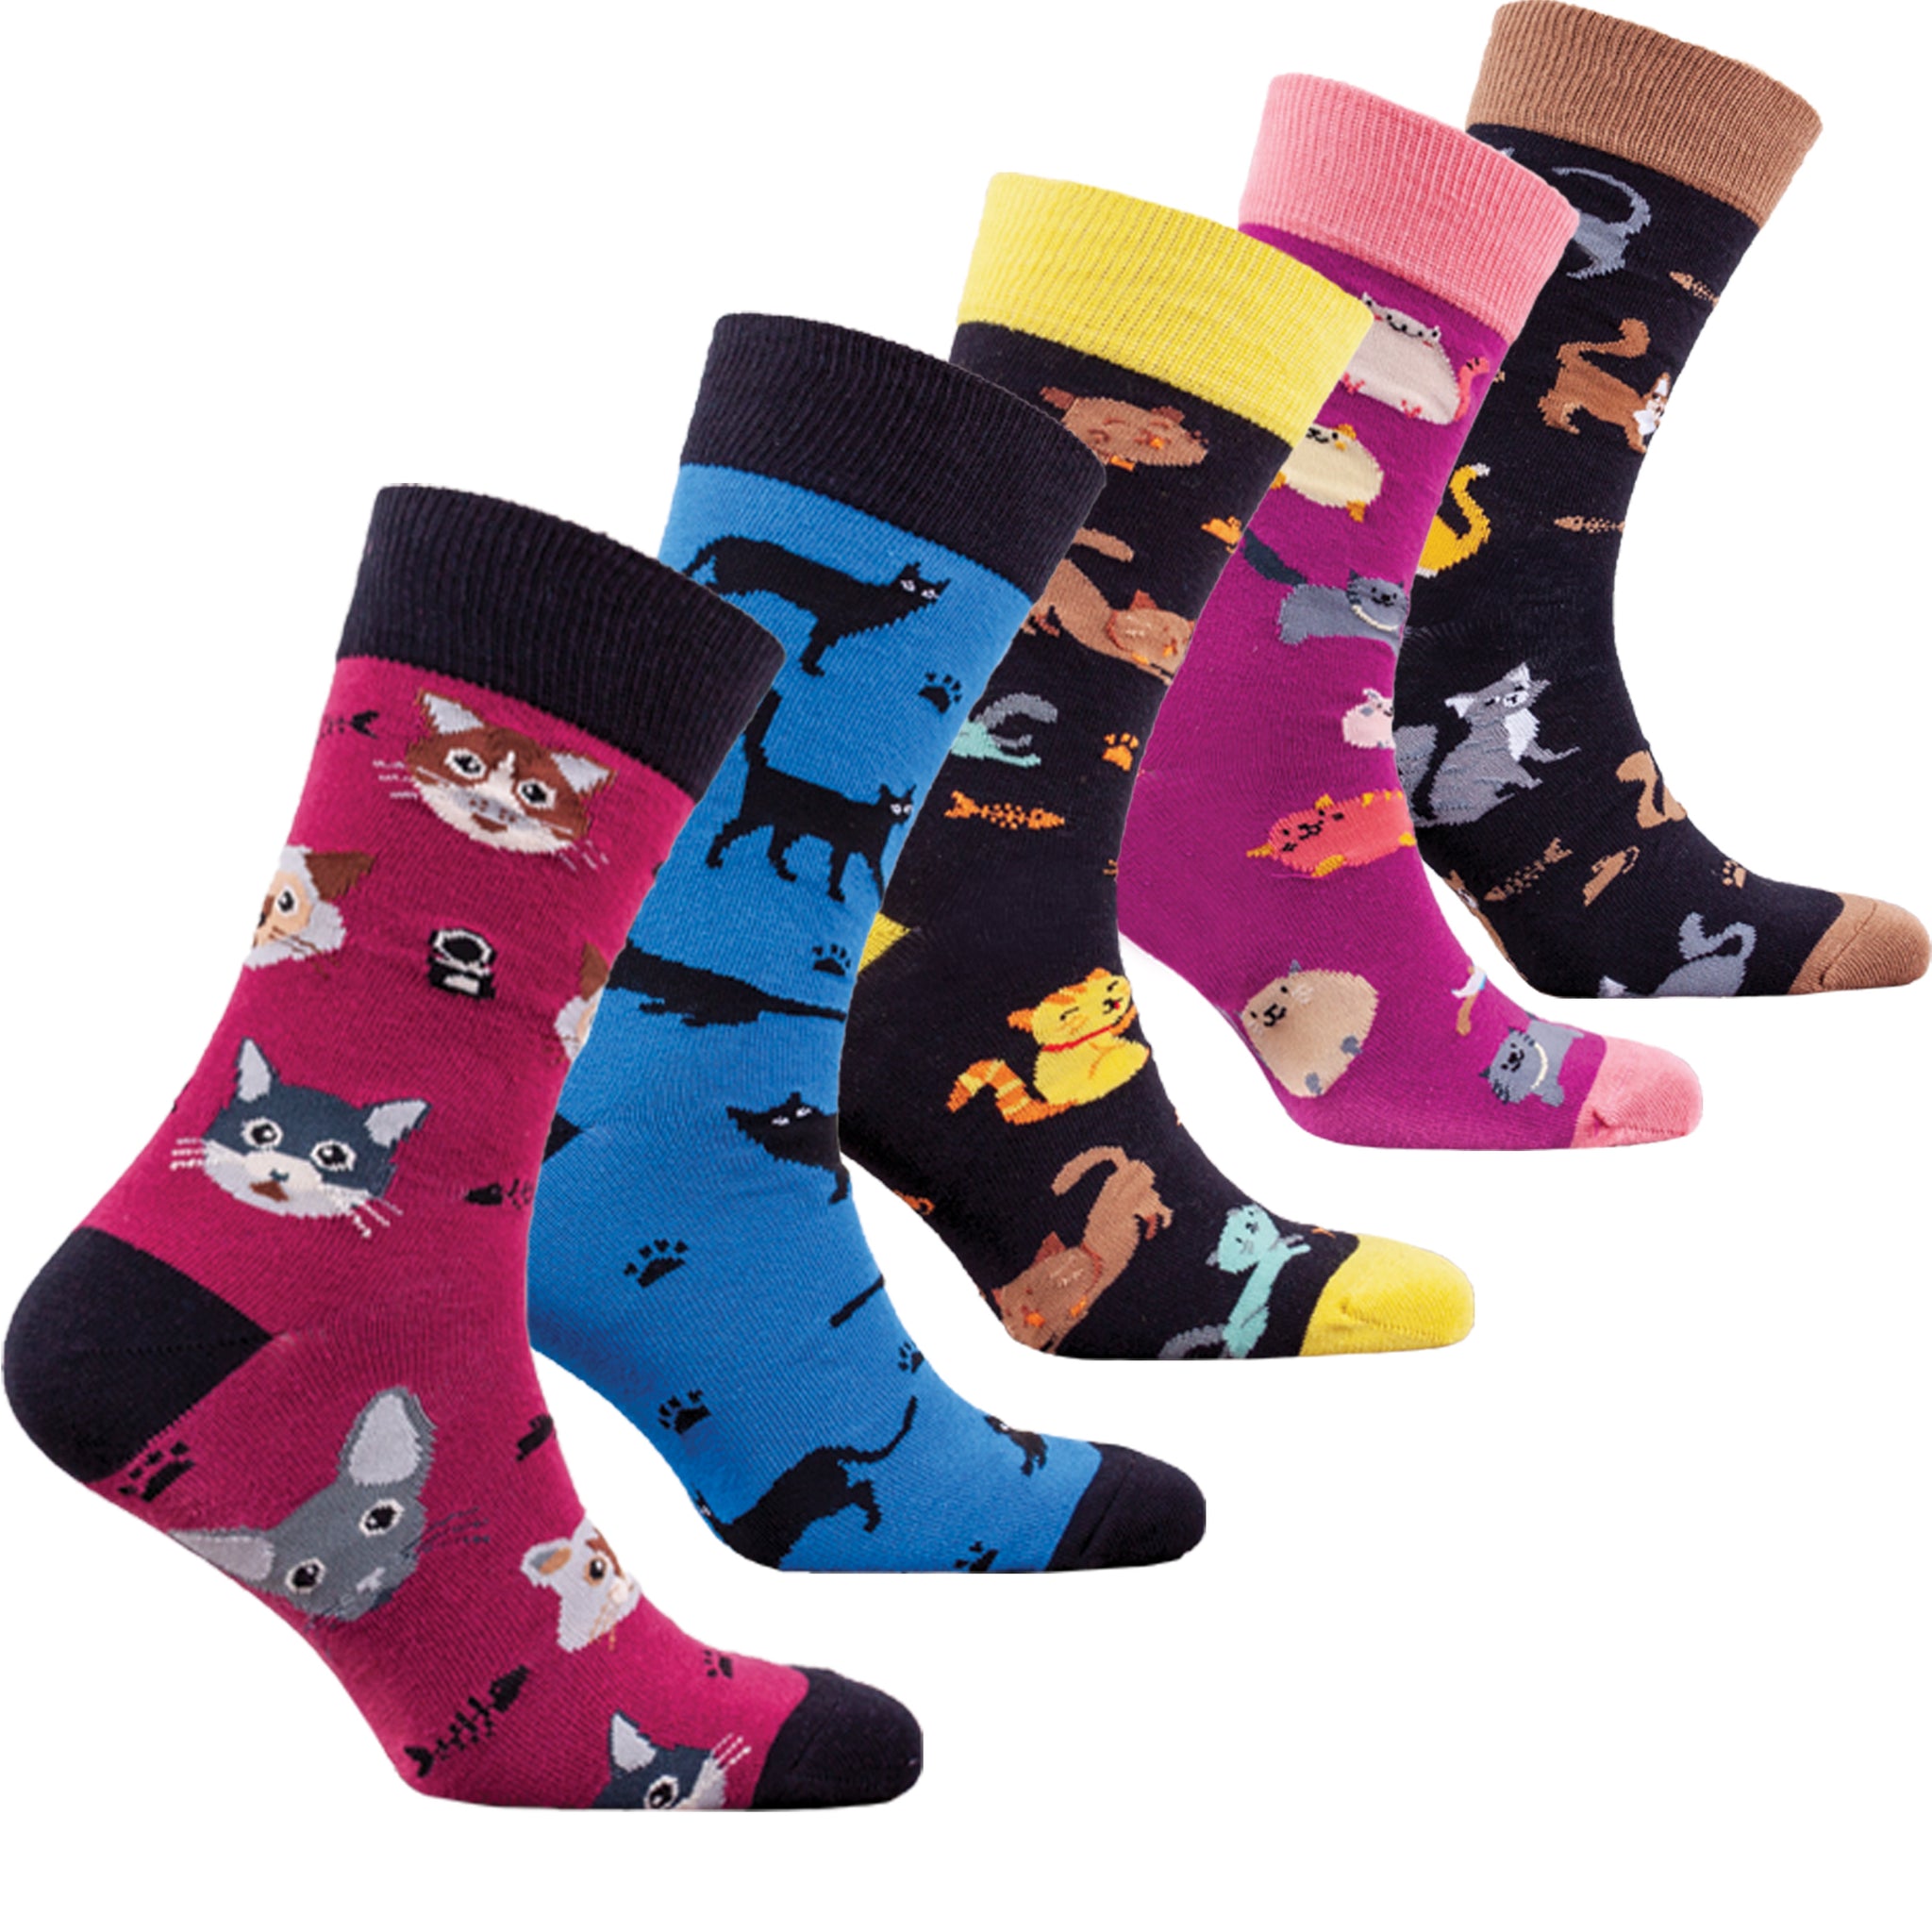 Men's Cats Socks